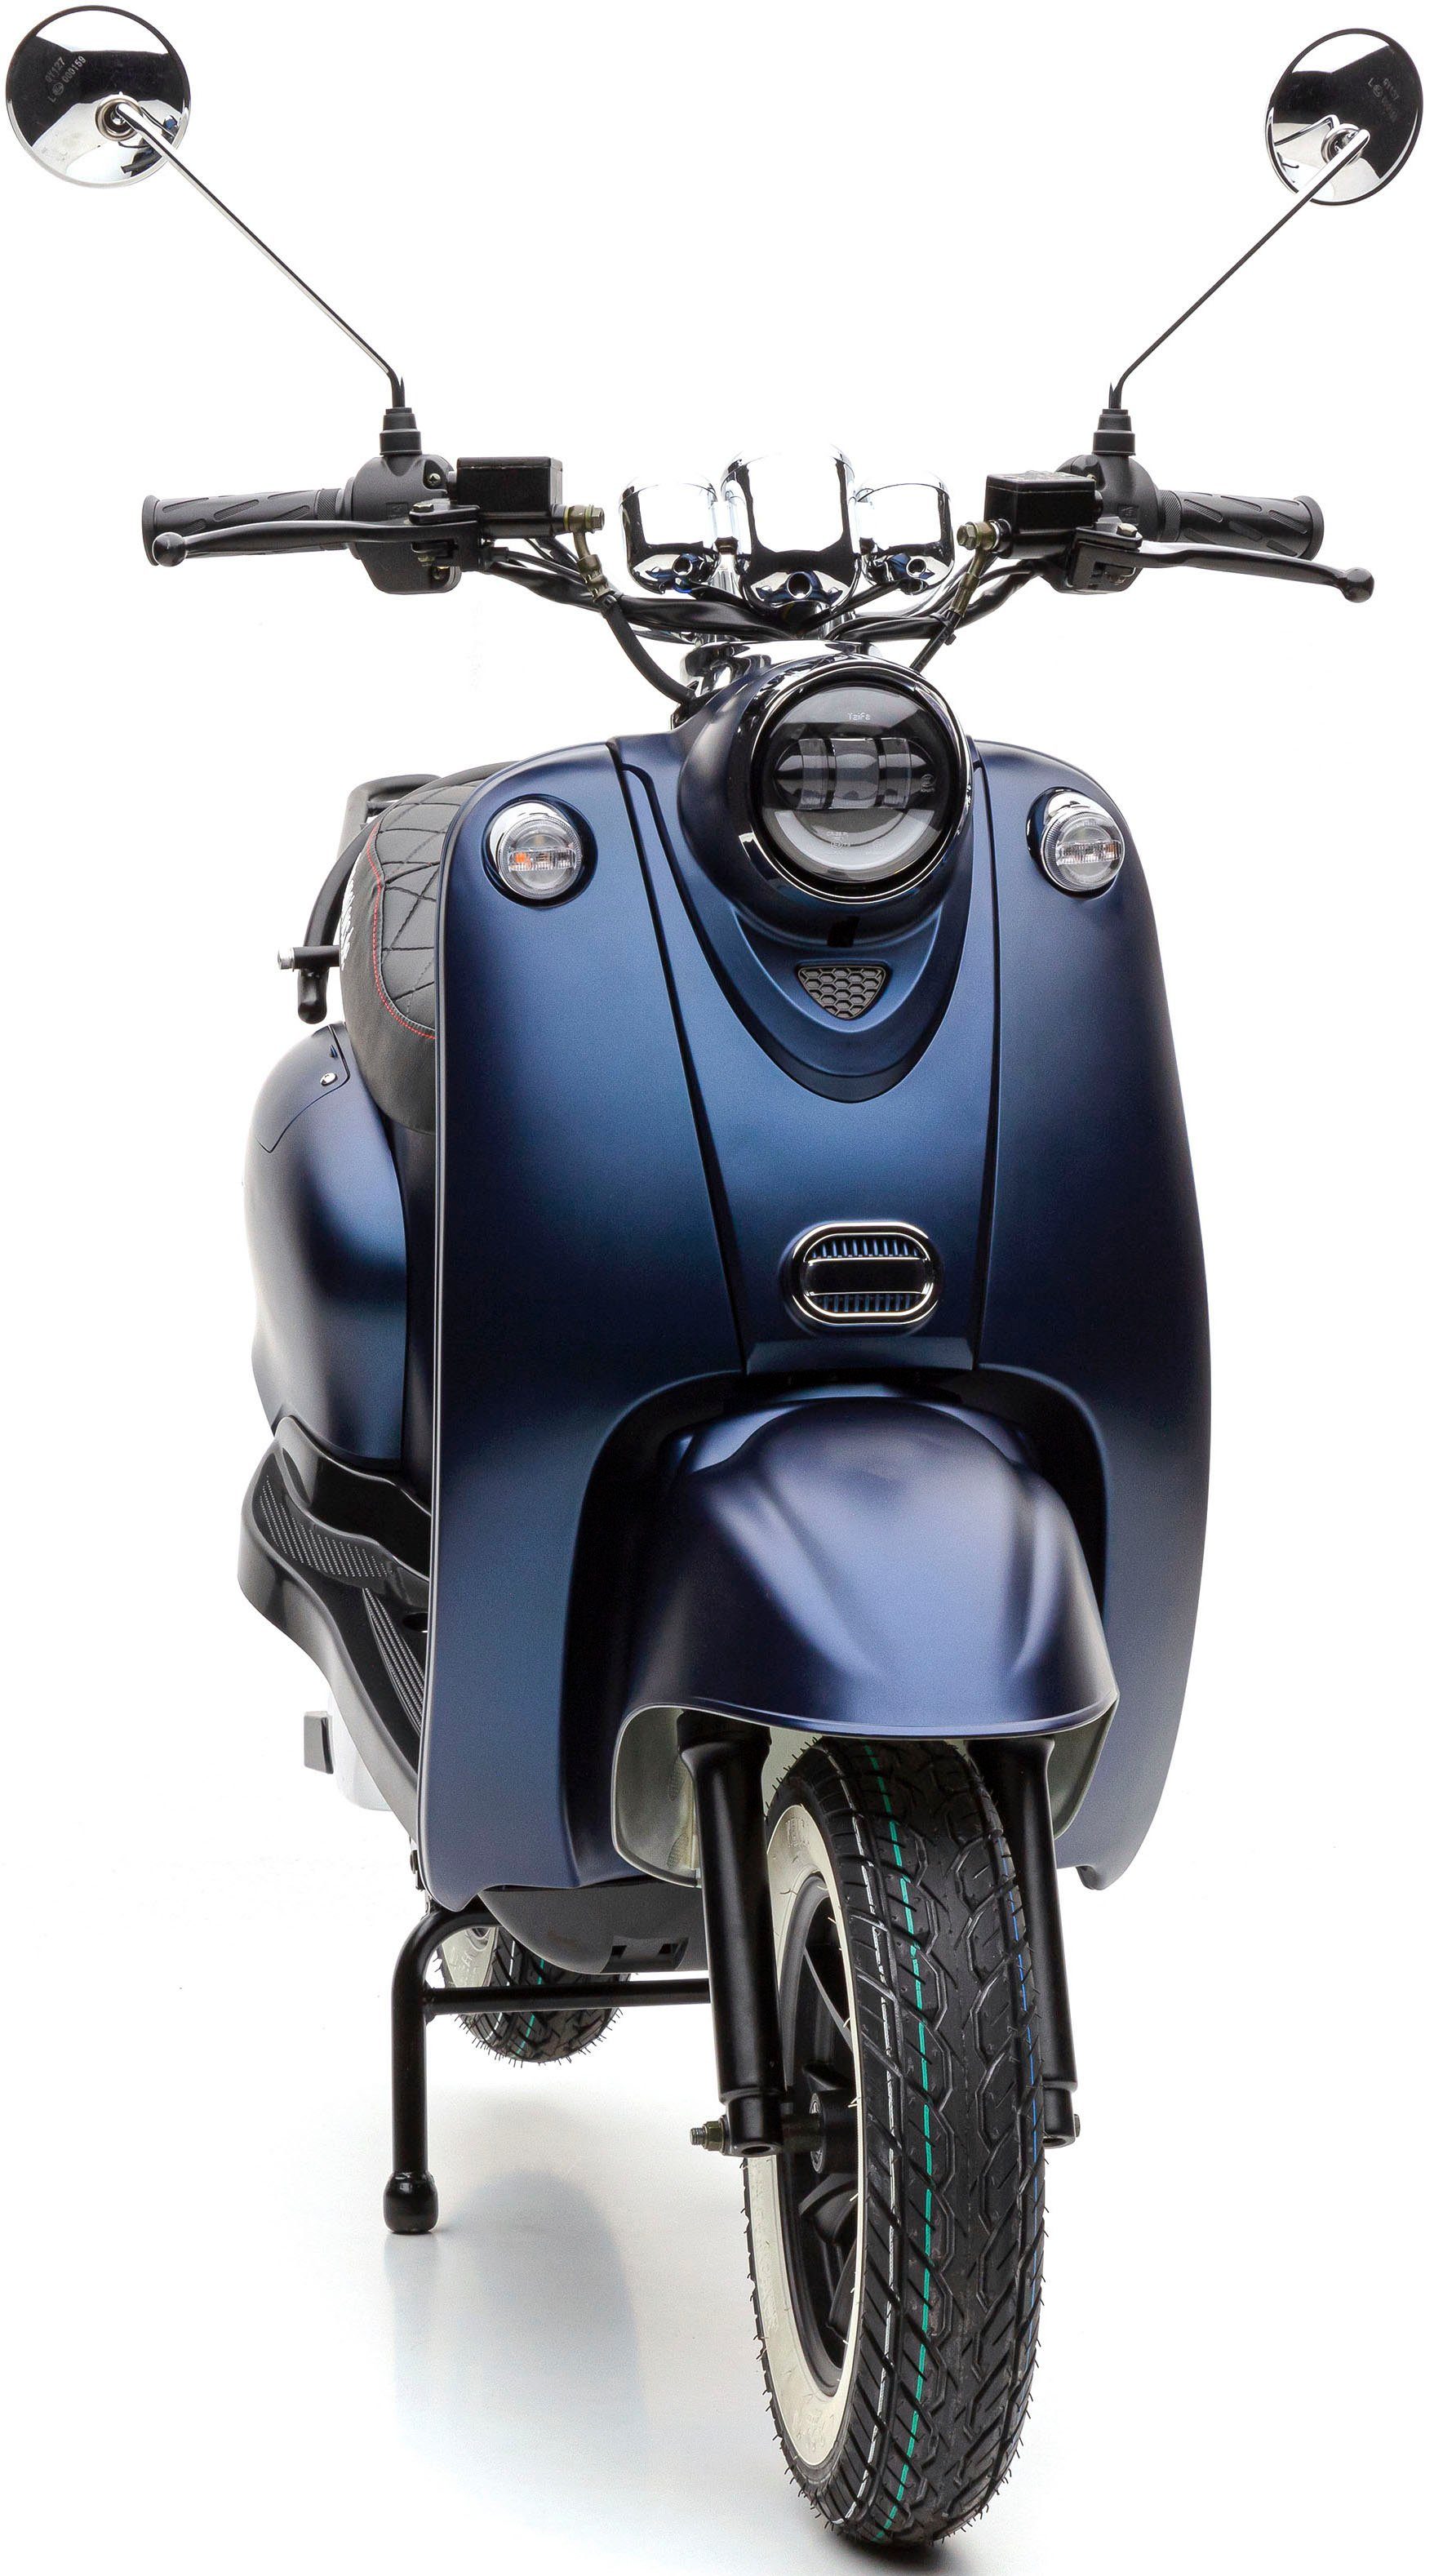 Sitzbank W, Li km/h, 45 Weißwandreifen, Star Tacho Mit digitalem 2000 blau E-Motorroller Motors Premium, Nova und eRetro gesteppter